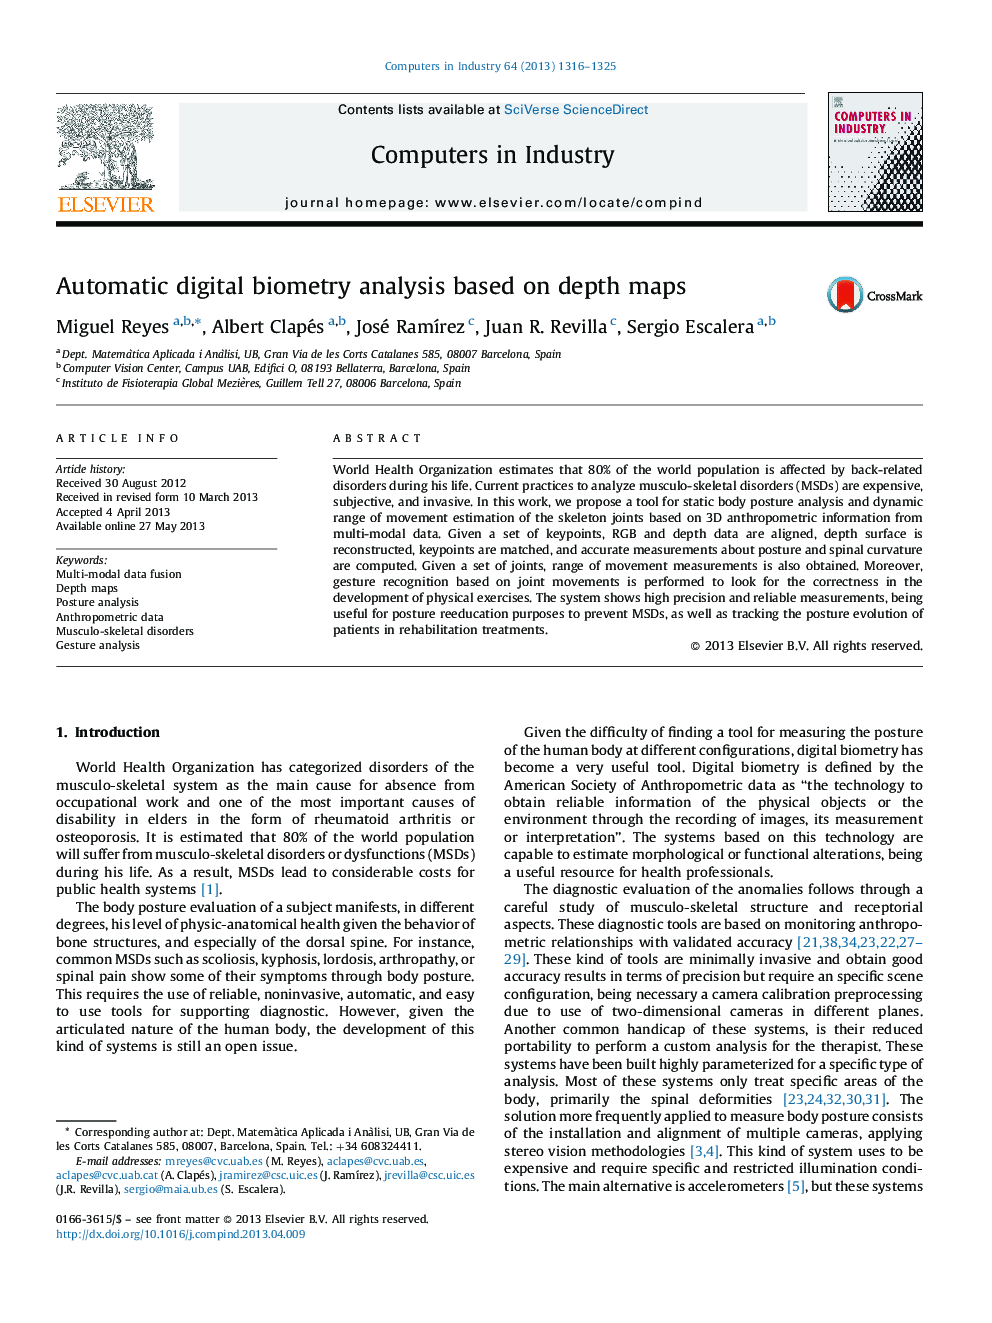 Automatic digital biometry analysis based on depth maps